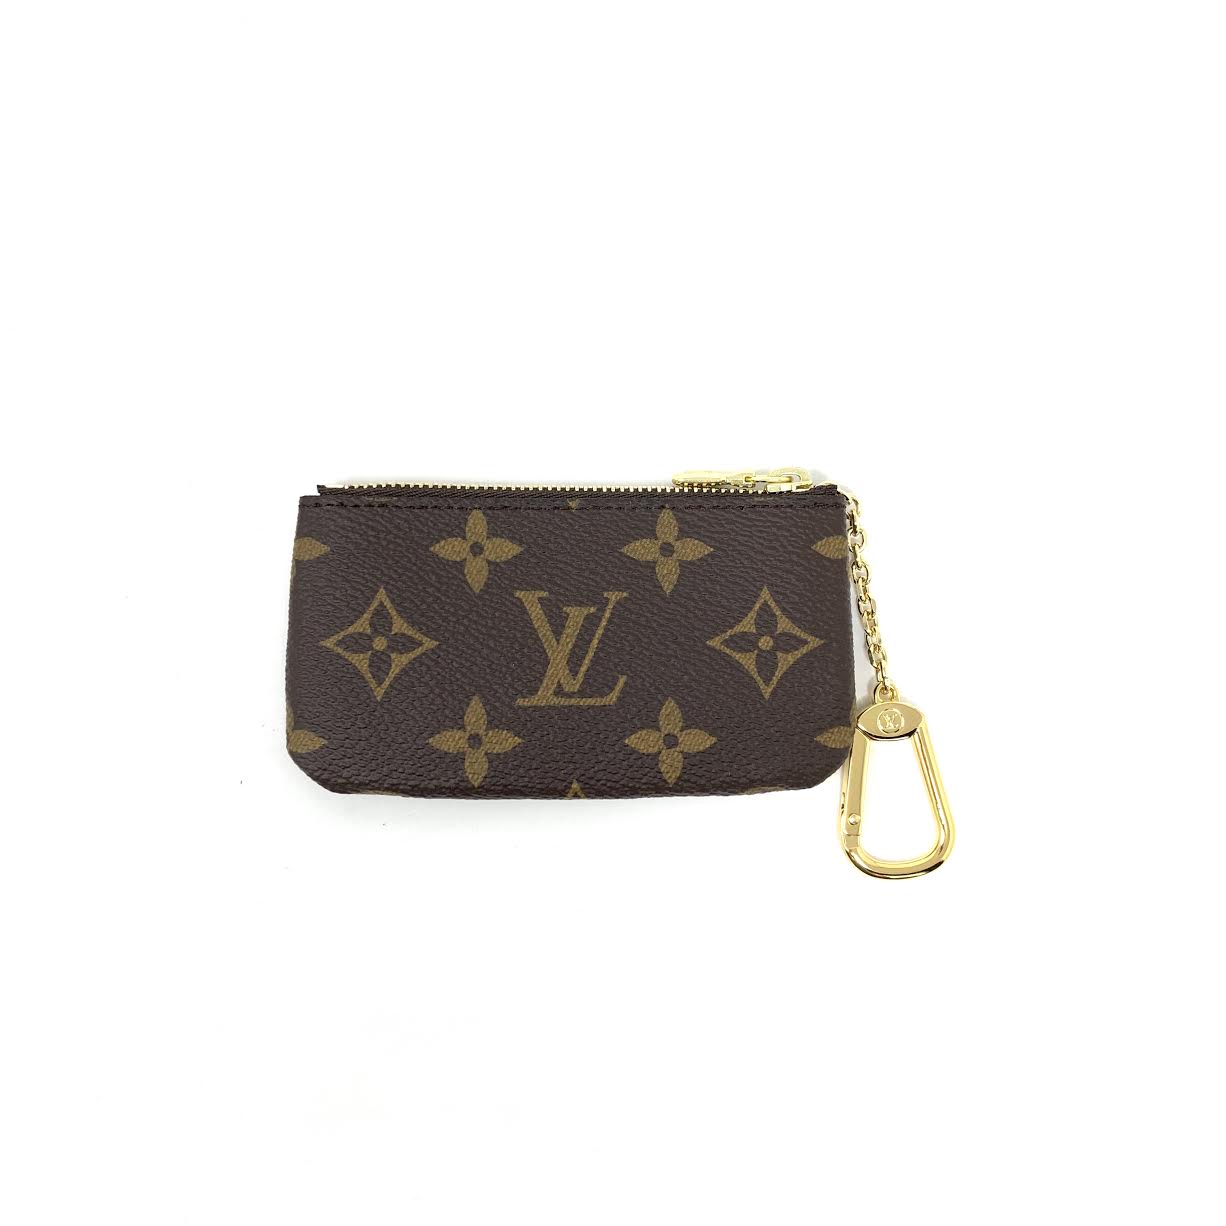 Louis Vuitton Monogram Card Holder w/ Tags